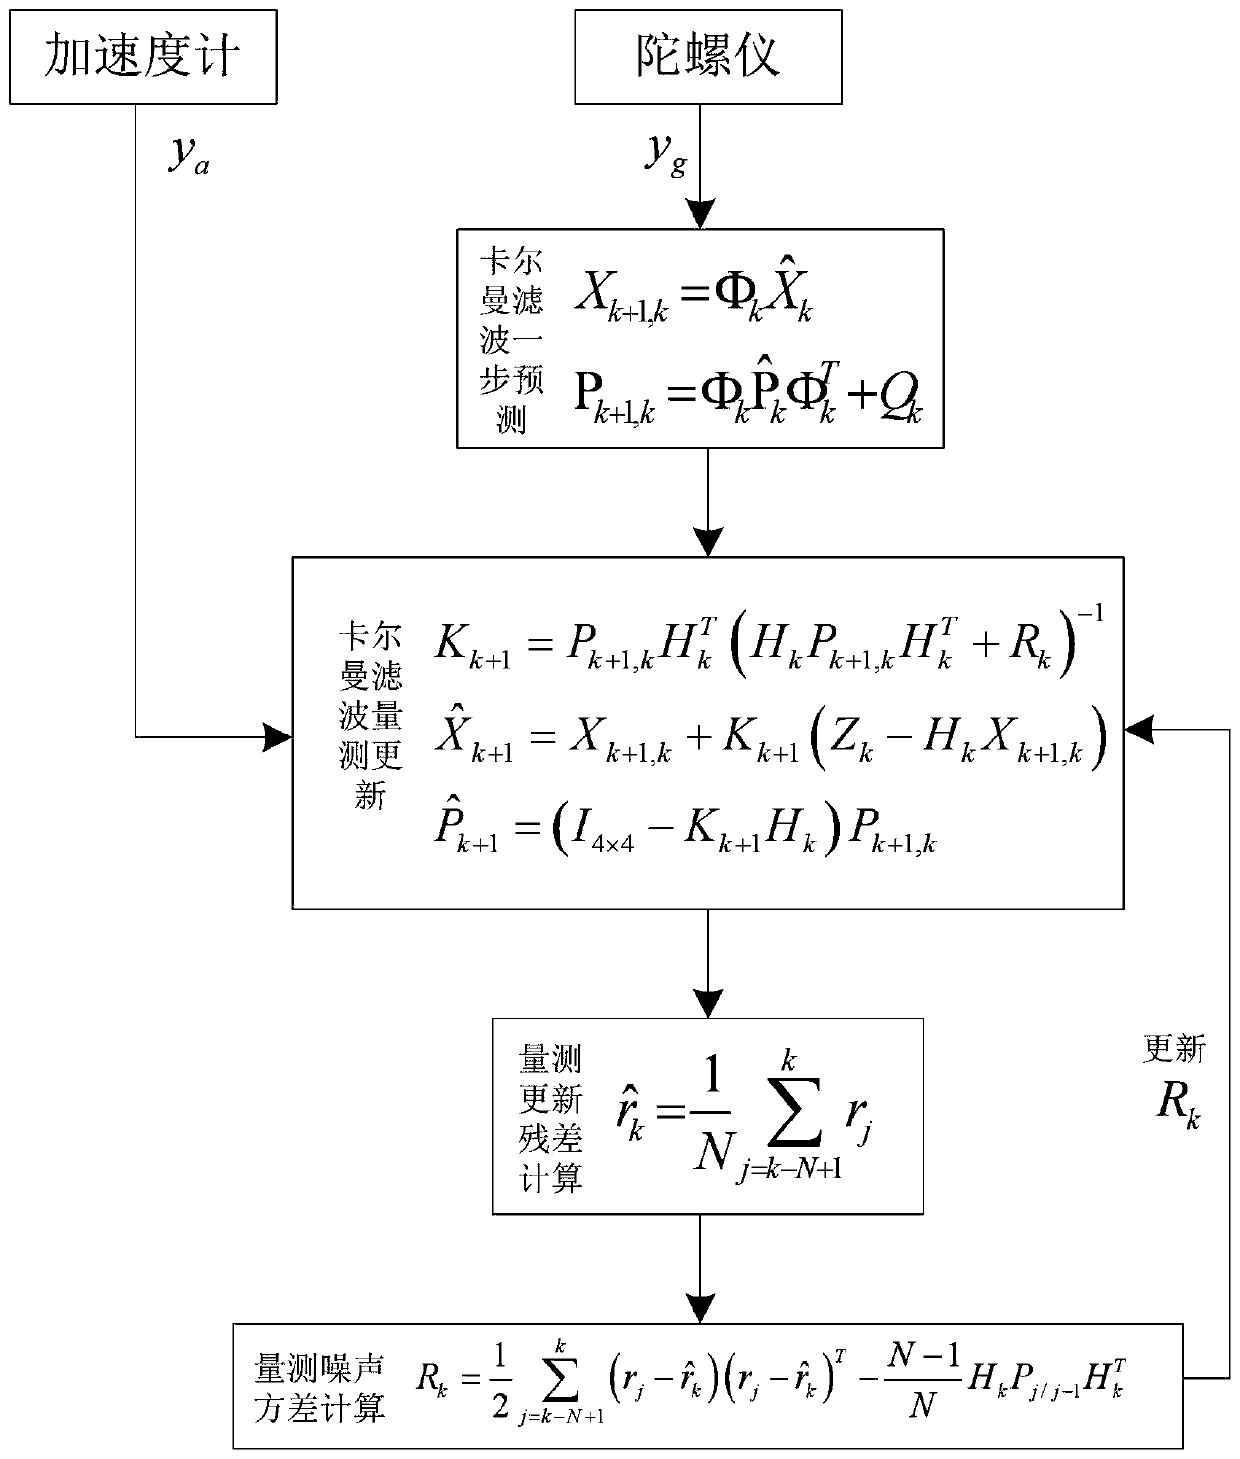 Estimation method for attitude of inertial navigation system